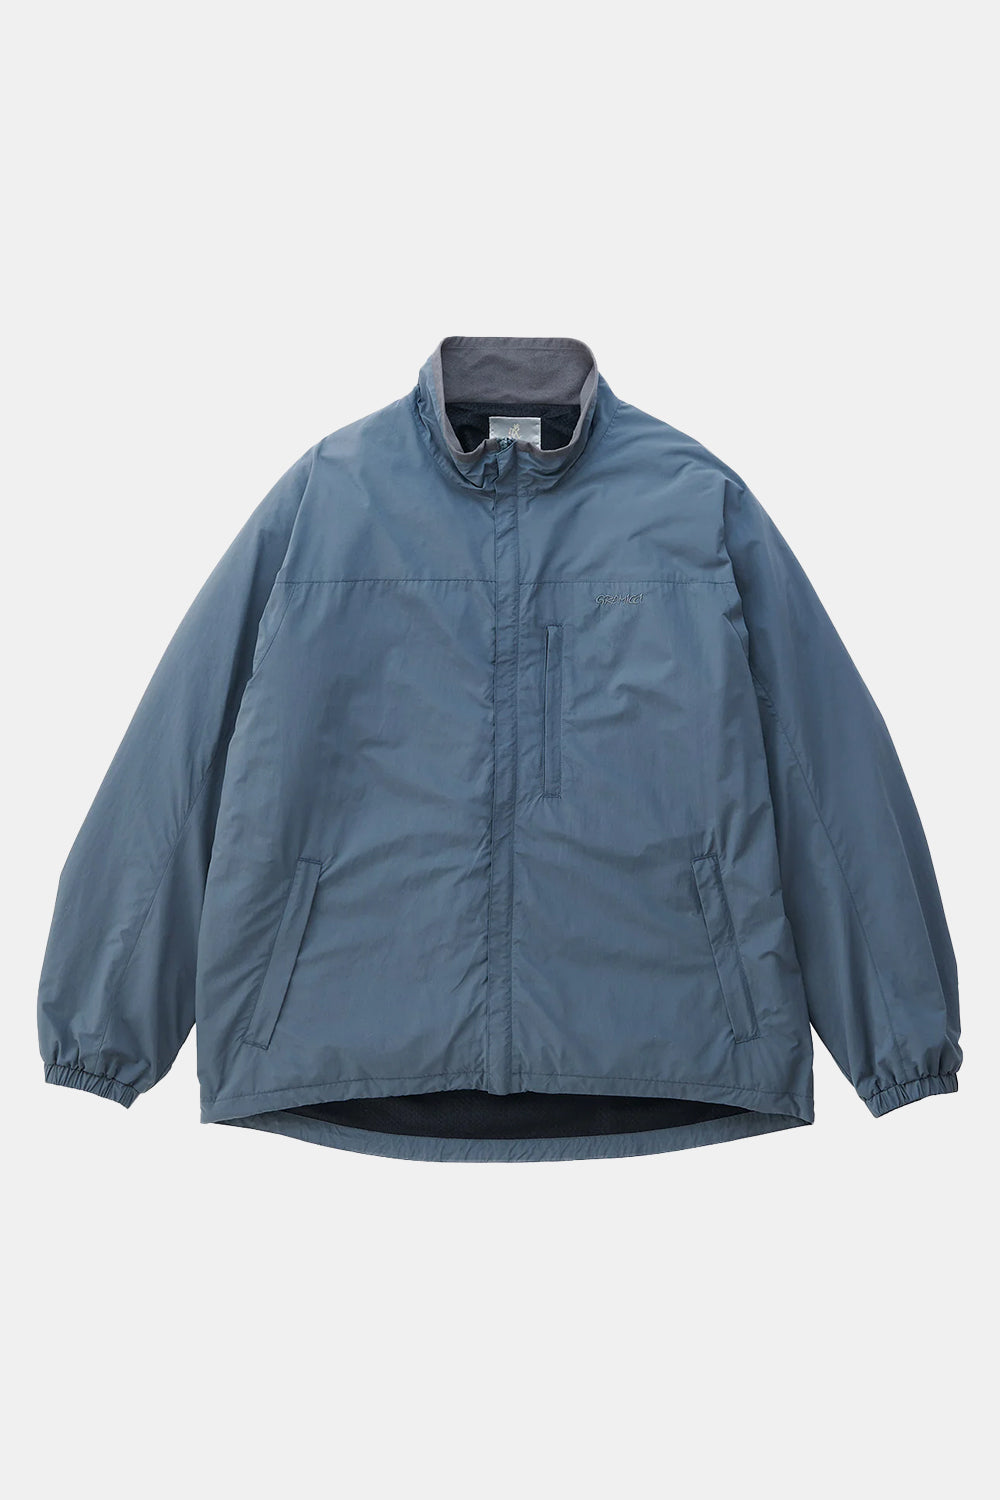 Gramicci Canyon Jacket (Slate Blue)